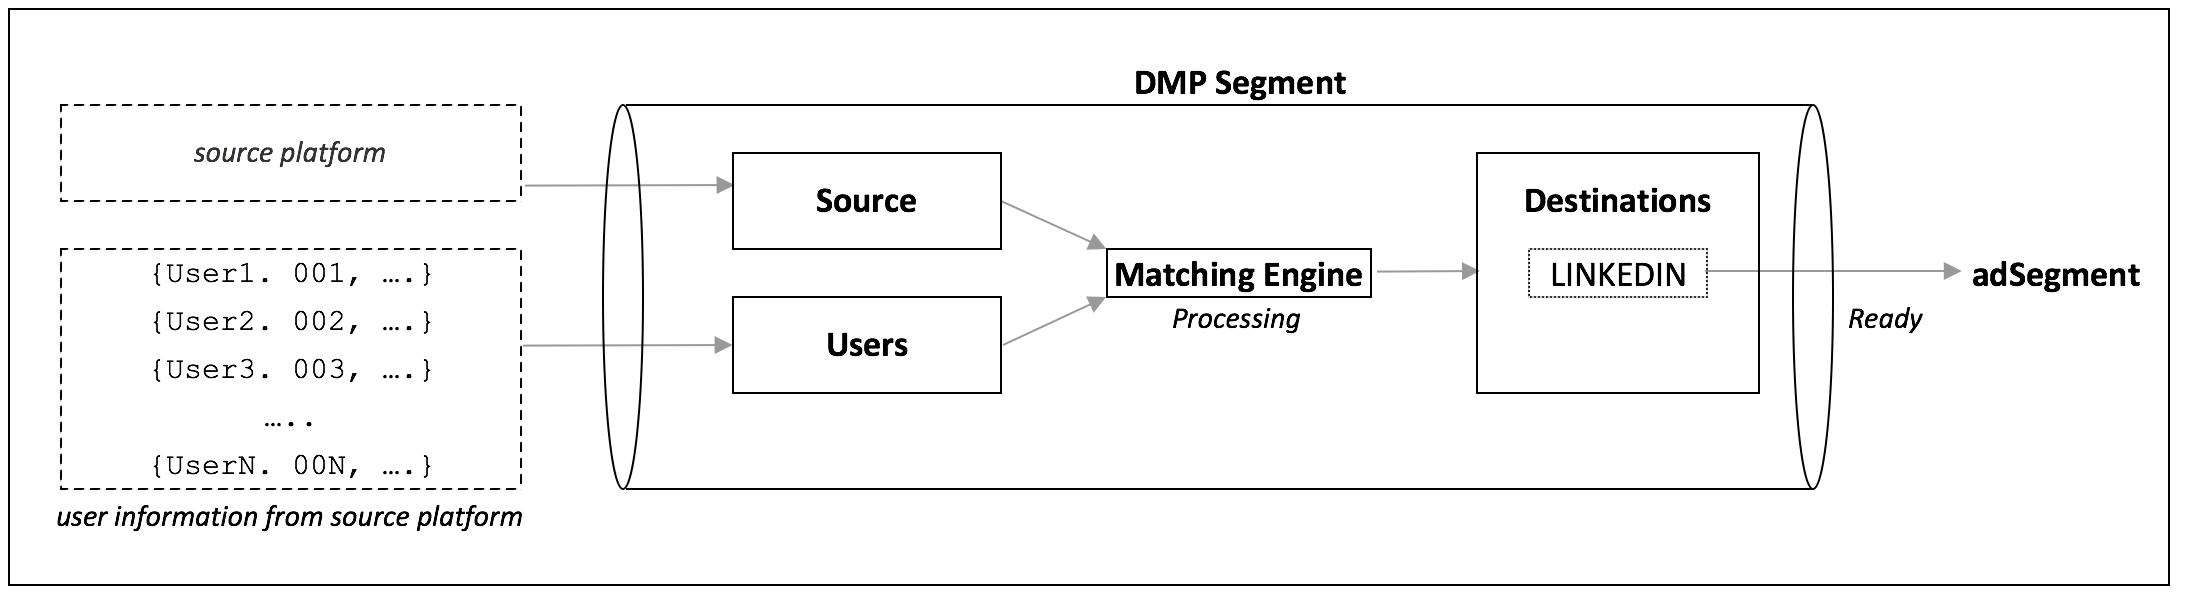 DMP Segment Workflow